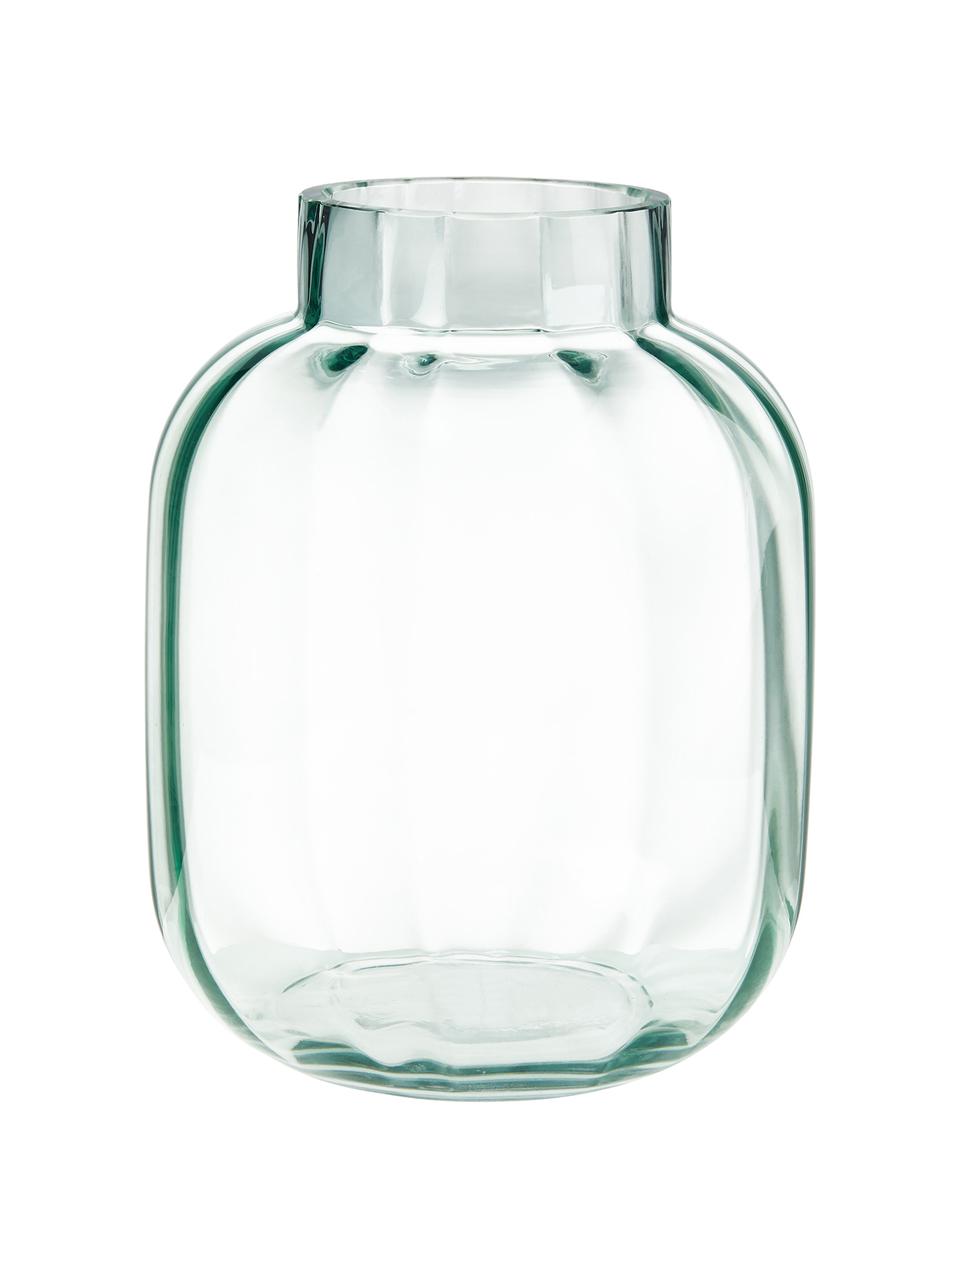 Glas-Vase Betty in Hellgrün, Glas, Hellgrün, transparent, Ø 18 x H 22 cm